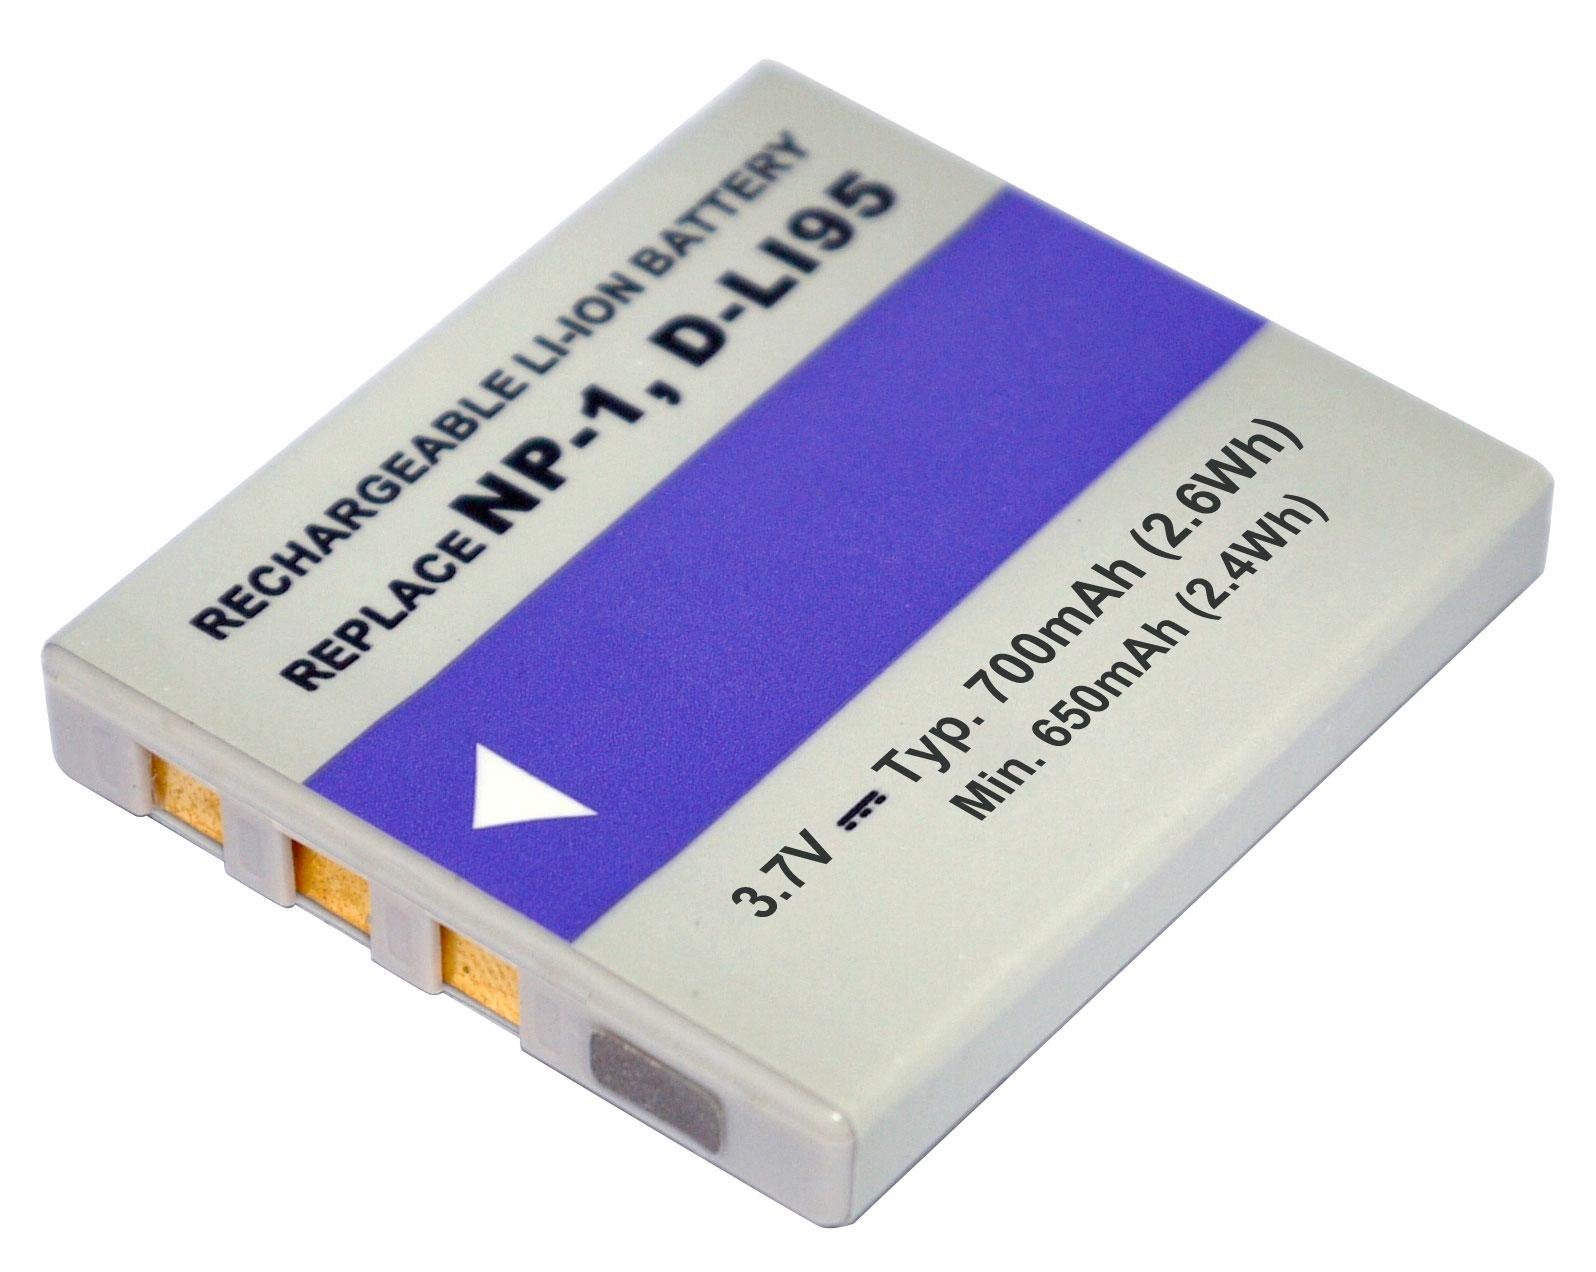 L60, i70S, OPS Digimax i6 L700, (Li-ion) NV3, Ersatz L50, Digimax L73, Digimax (3,7 L80, DKN004.533 Lithium-ion mAh PMP, PowerSmart i70, SAMSUNG 700 NV7 L700S, NV5, Kamera-Akku V), Ersatzbatterie SLB-0837, NV7, für Digimax